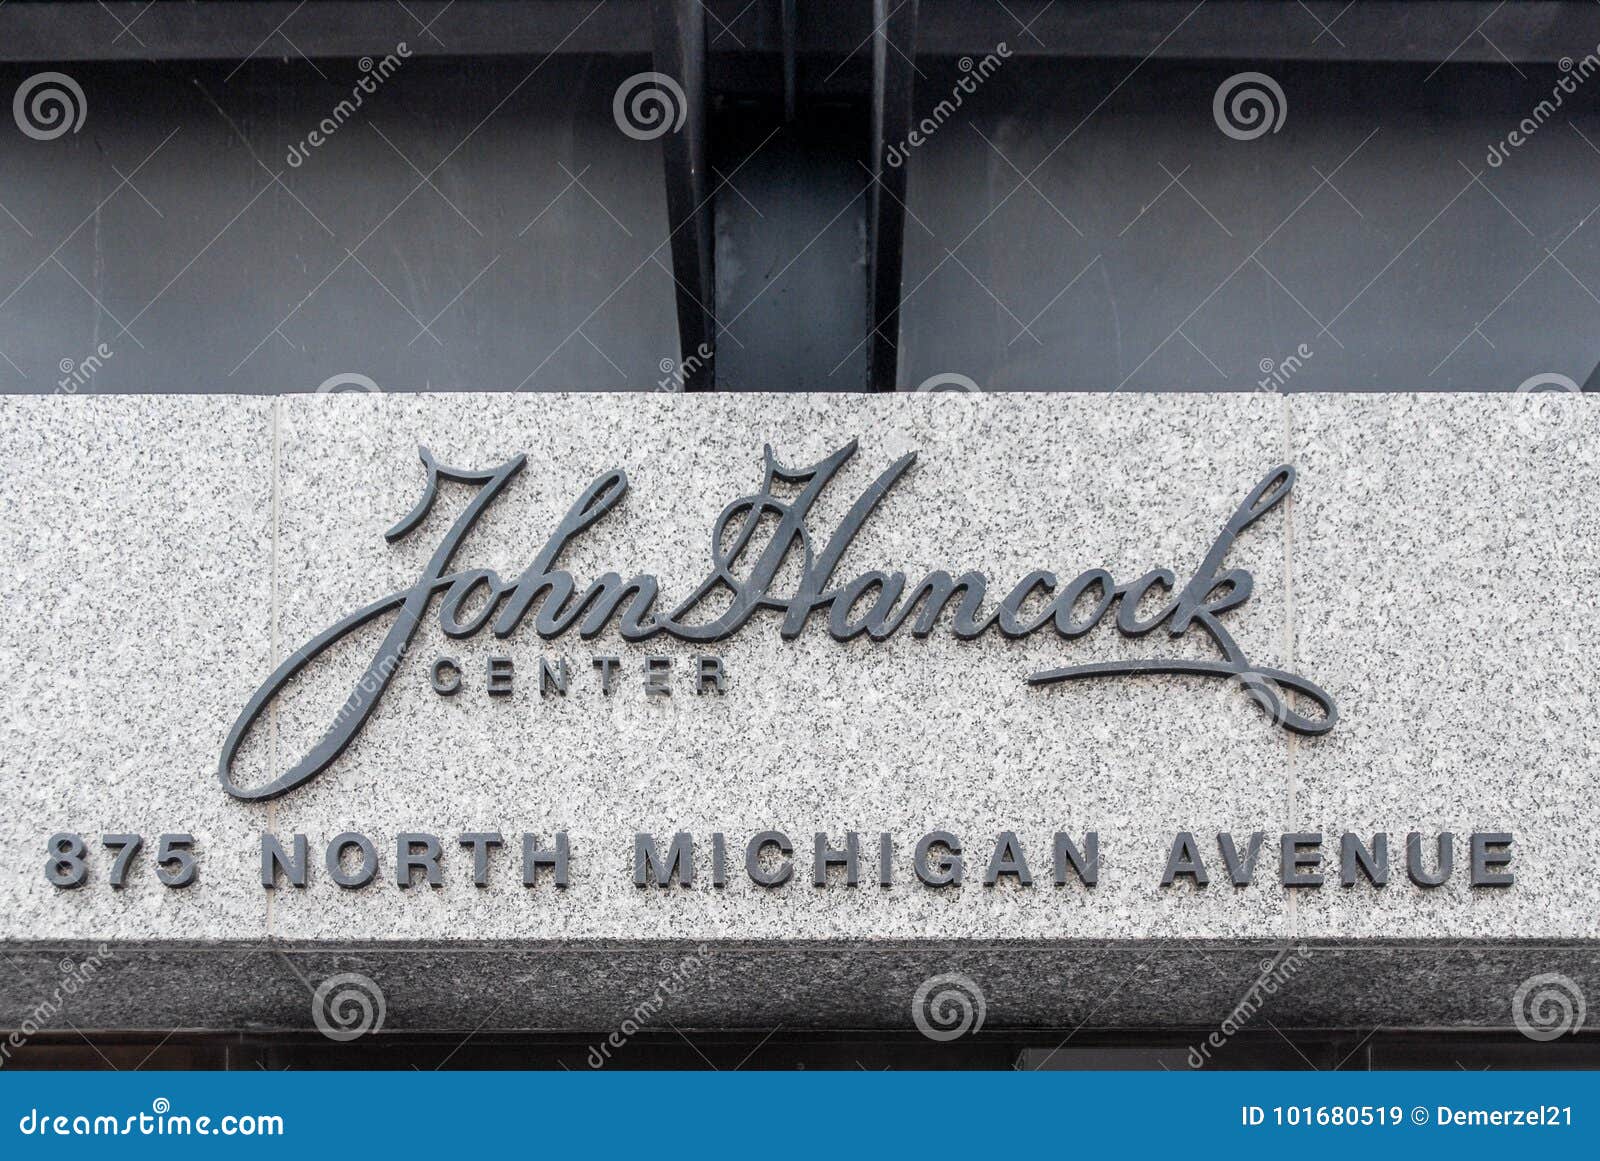 John Hancock Building - Chicago Editorial Stock Image - Image of illinois,  landmark: 101680519